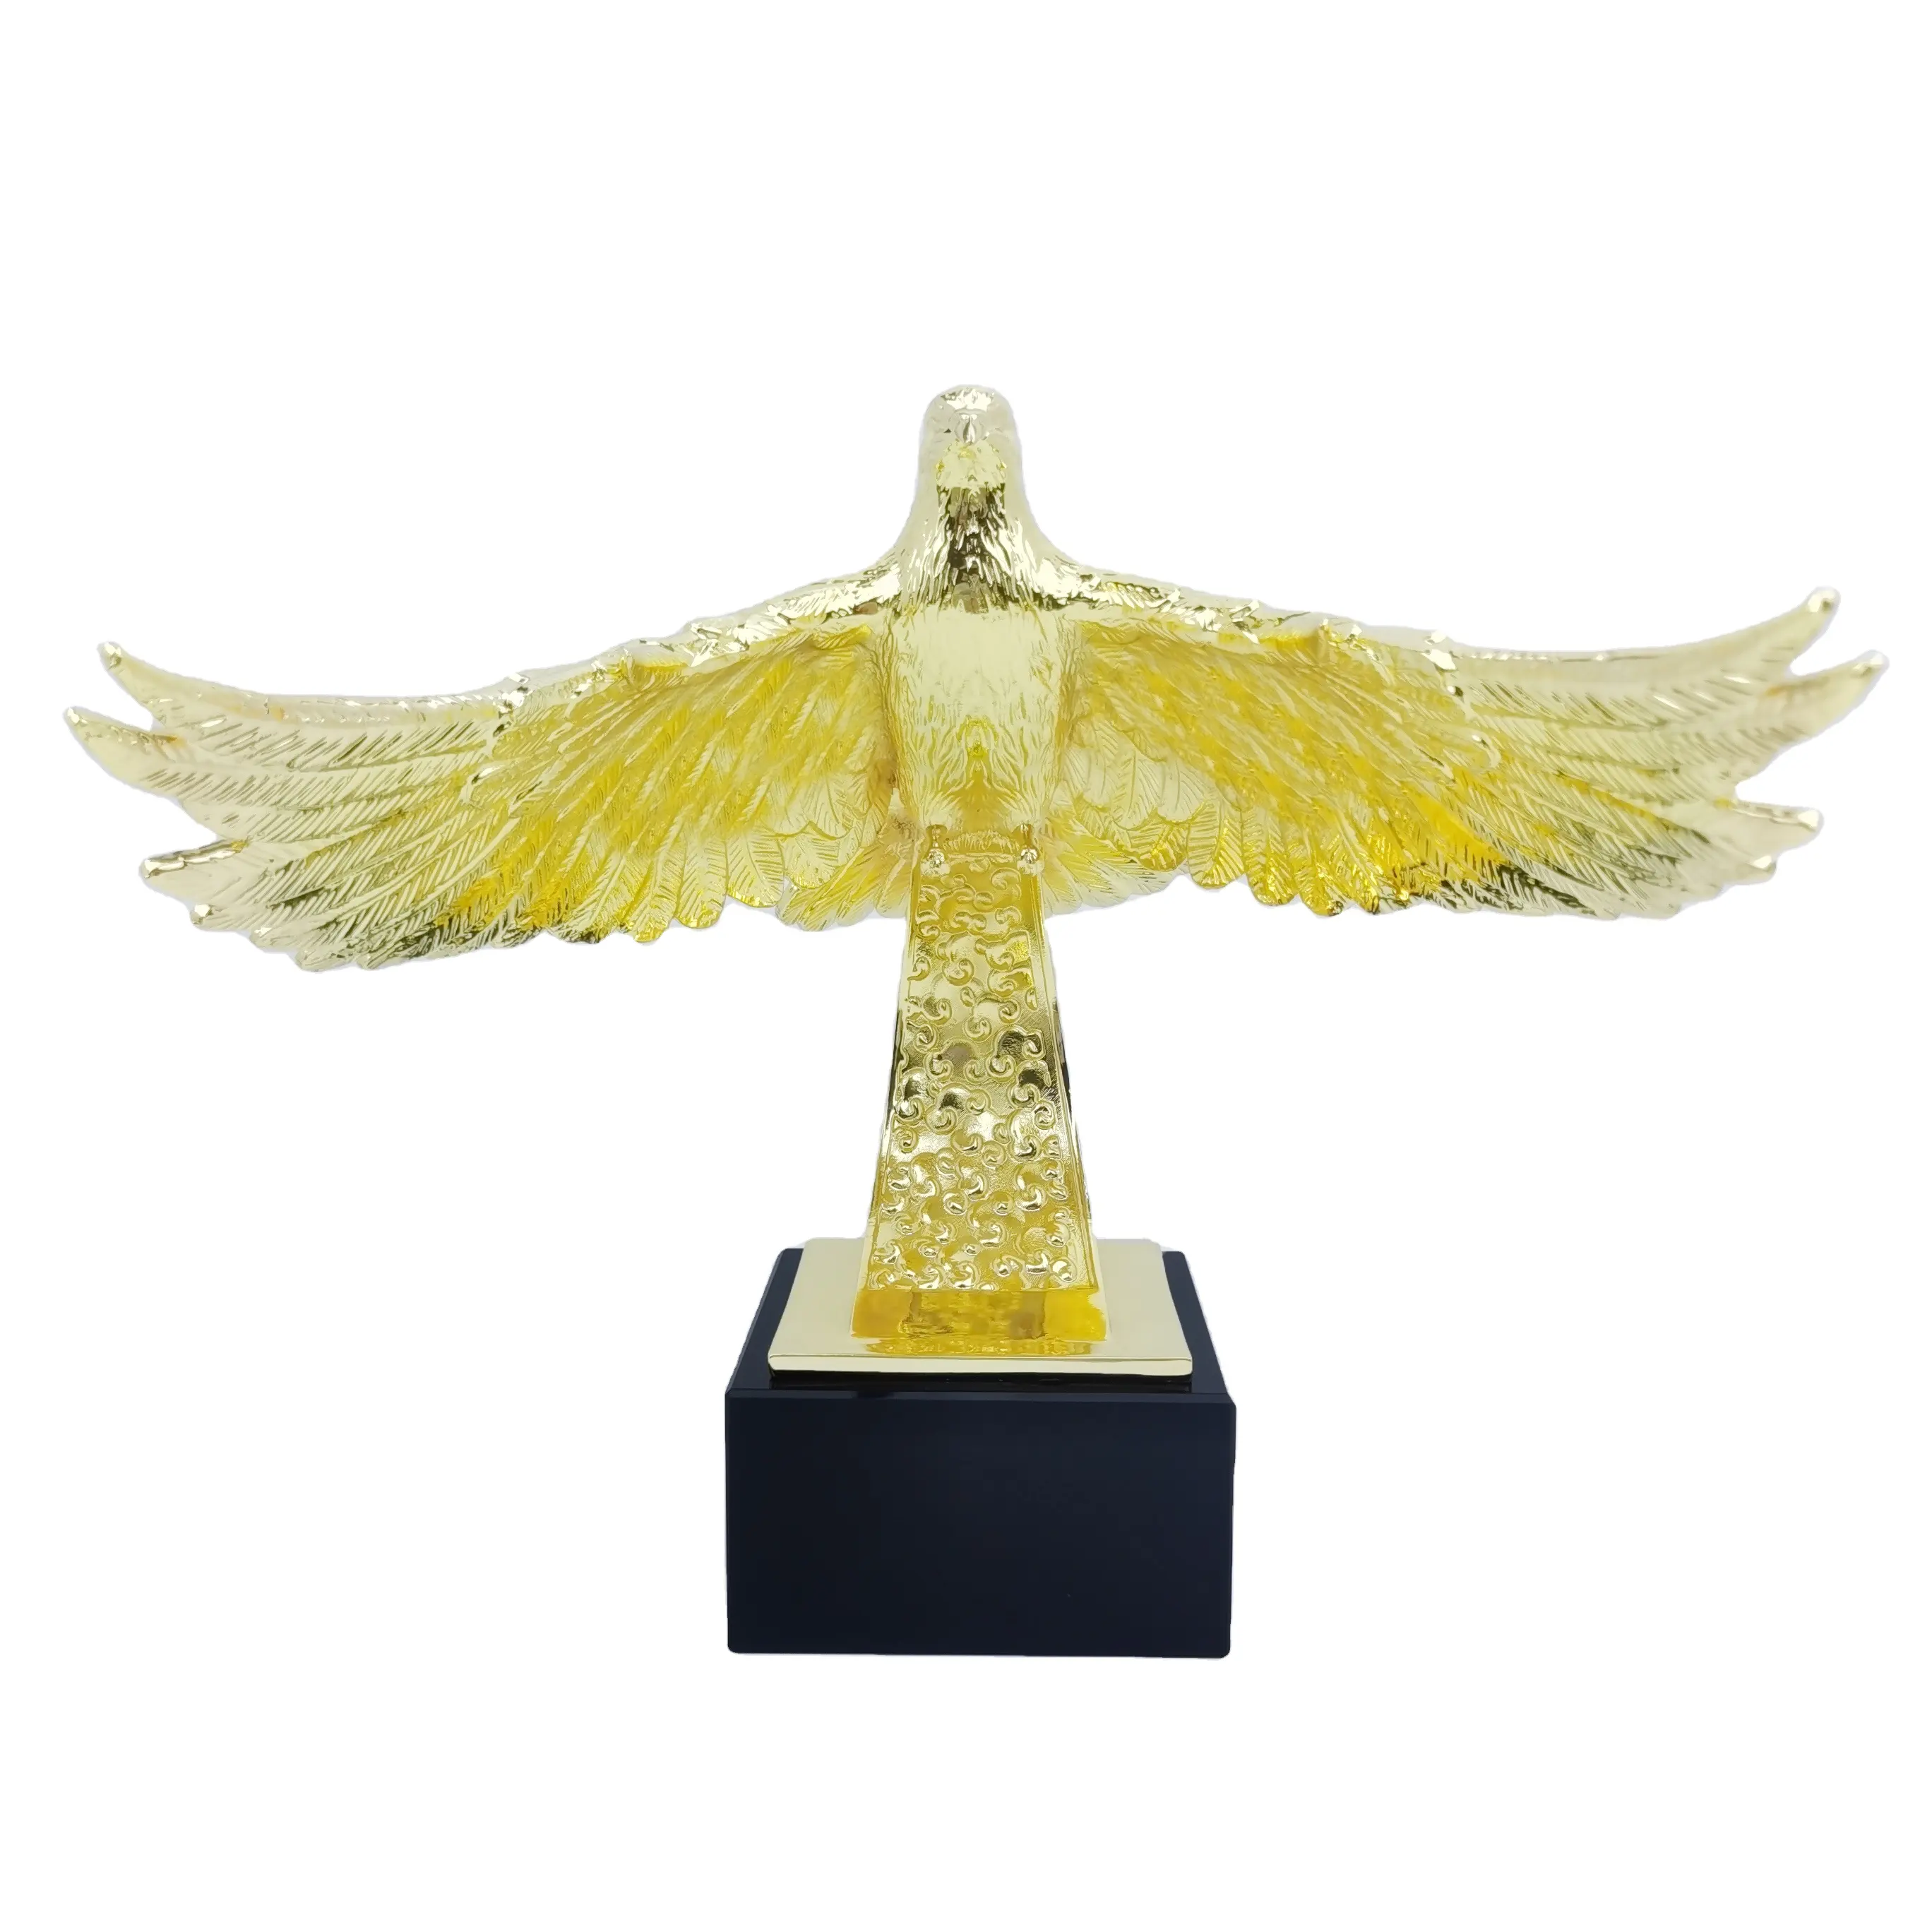 Hot selling Custom Metal Trophy Carved Gold Eagle Statues Sculpture Awards Prize Home Decor